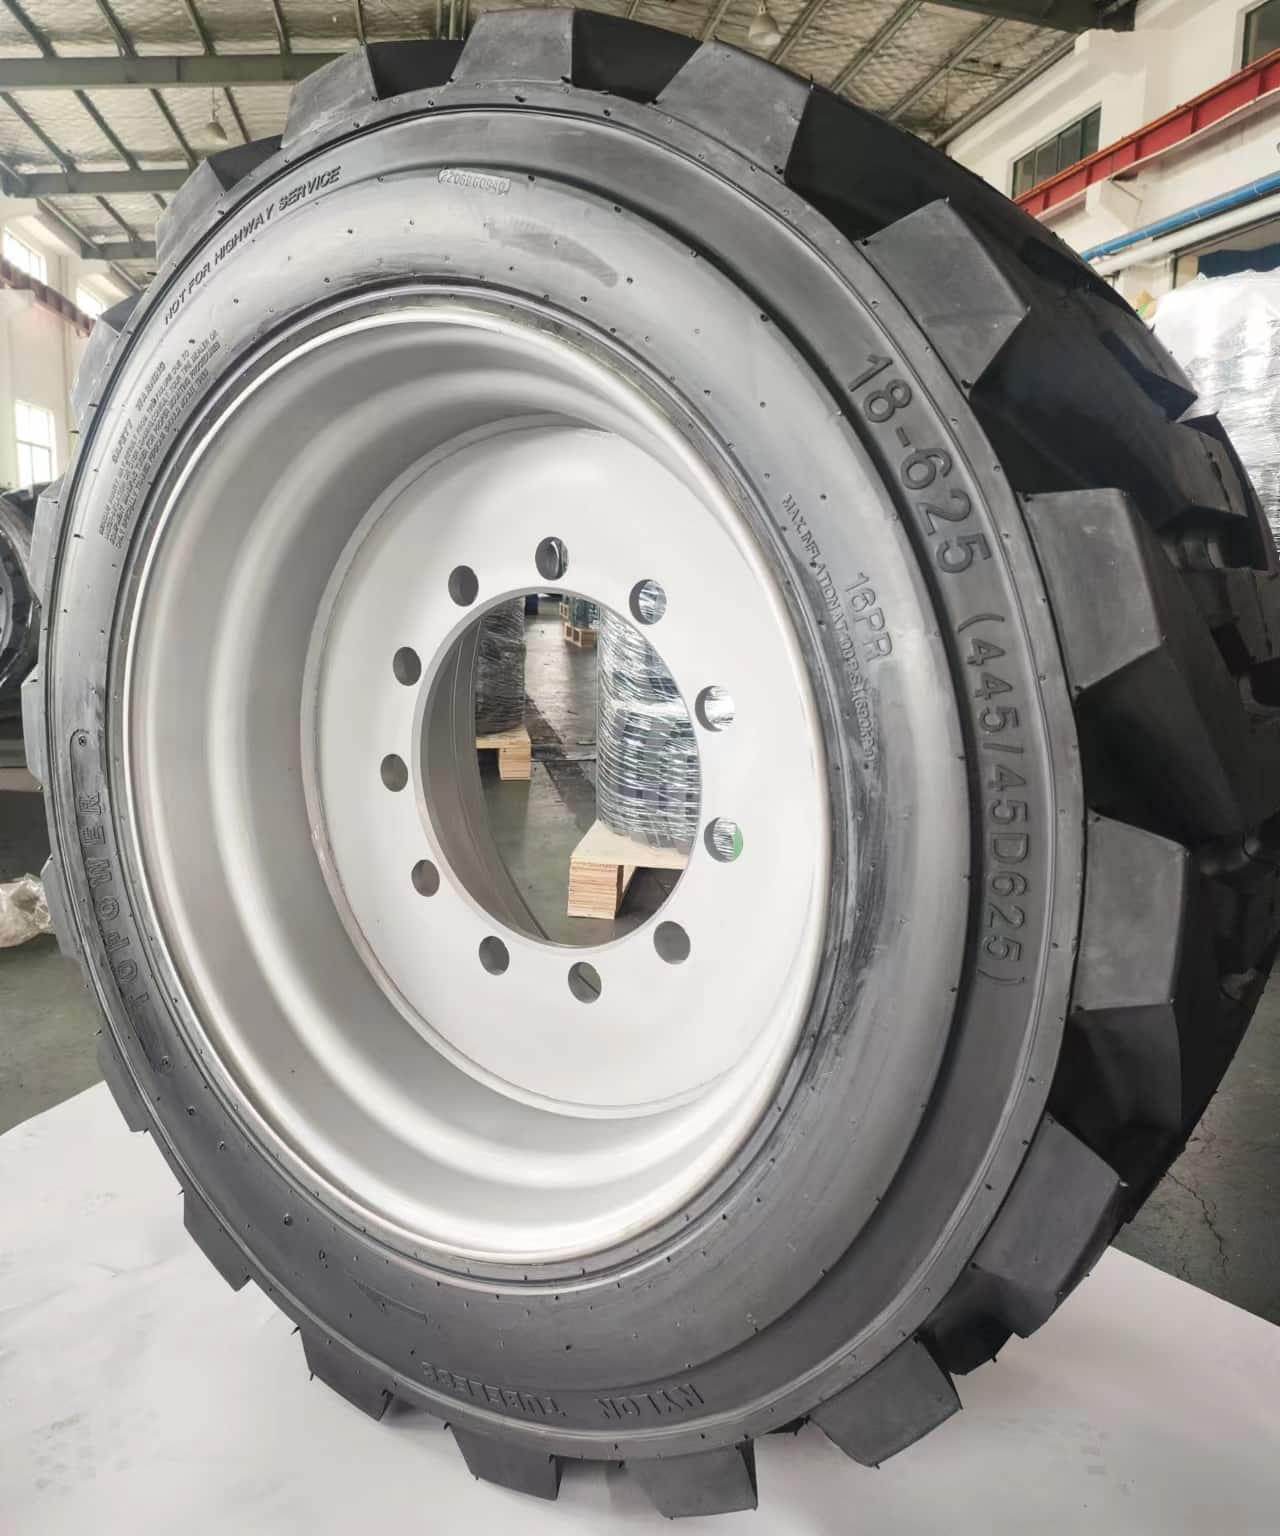 Pu foam filled solid tyre 18-625 for JLG 800AJ 680S skid steer